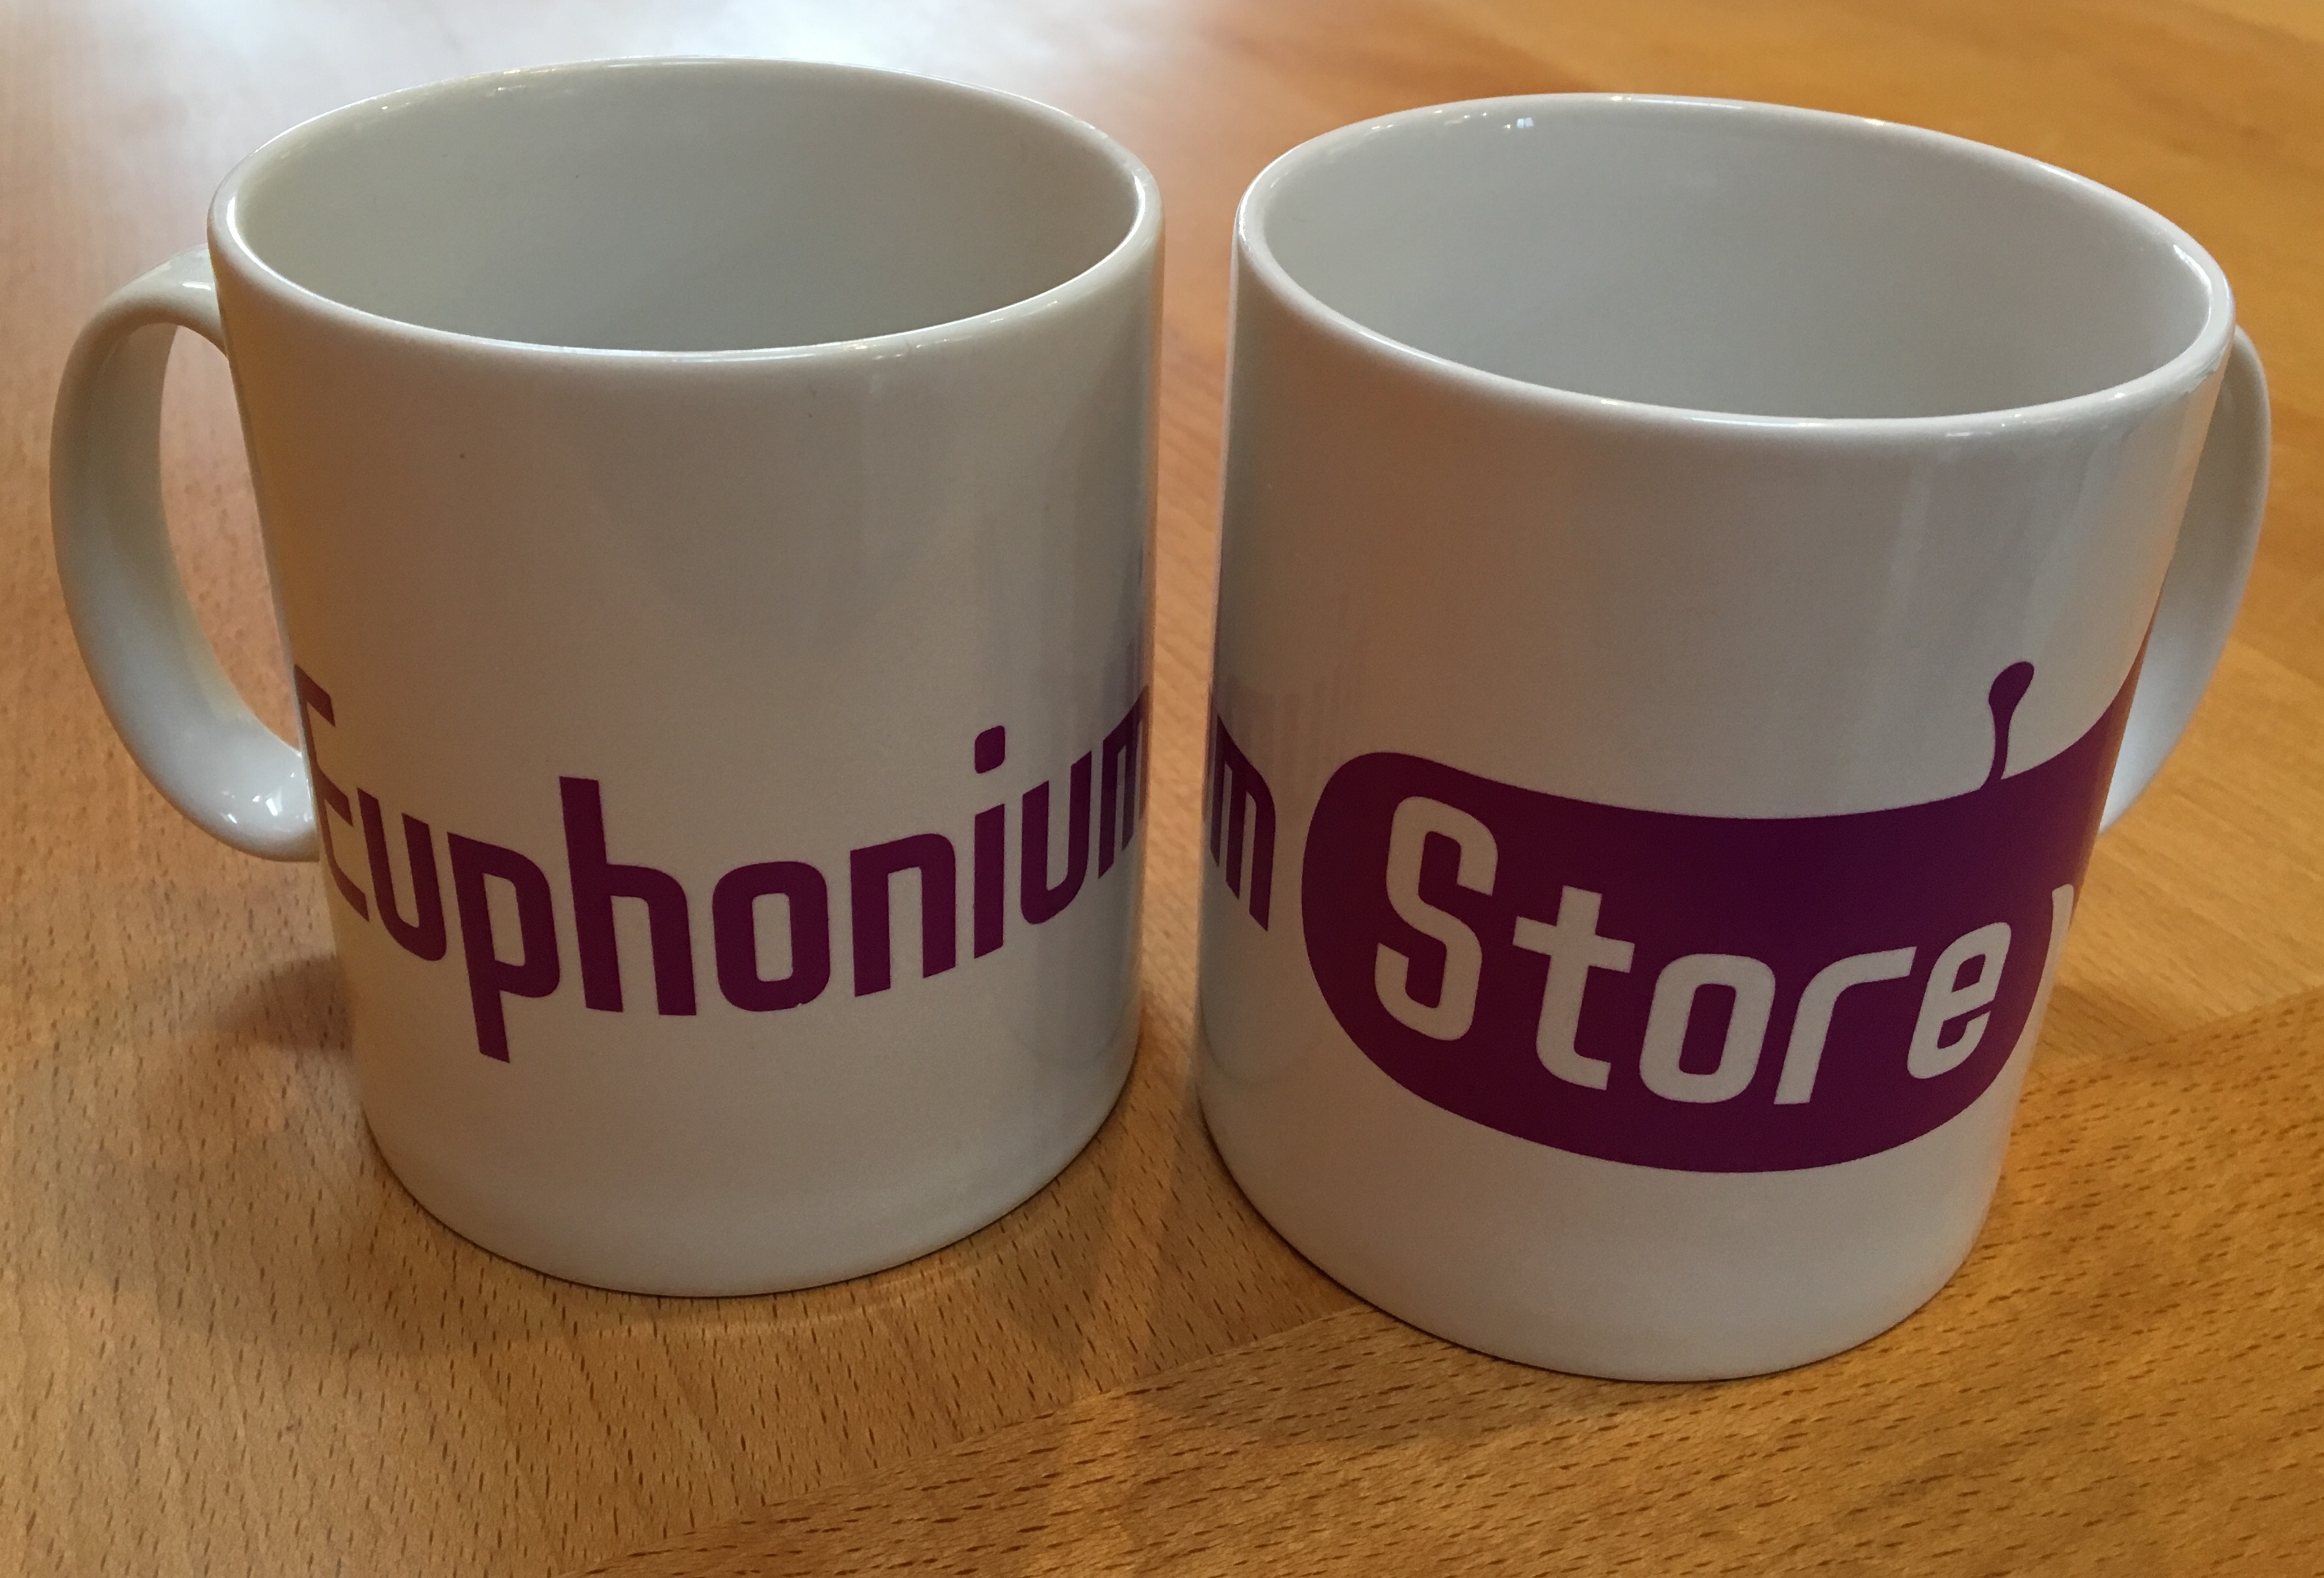 Euphonium Store Mug - set of 2